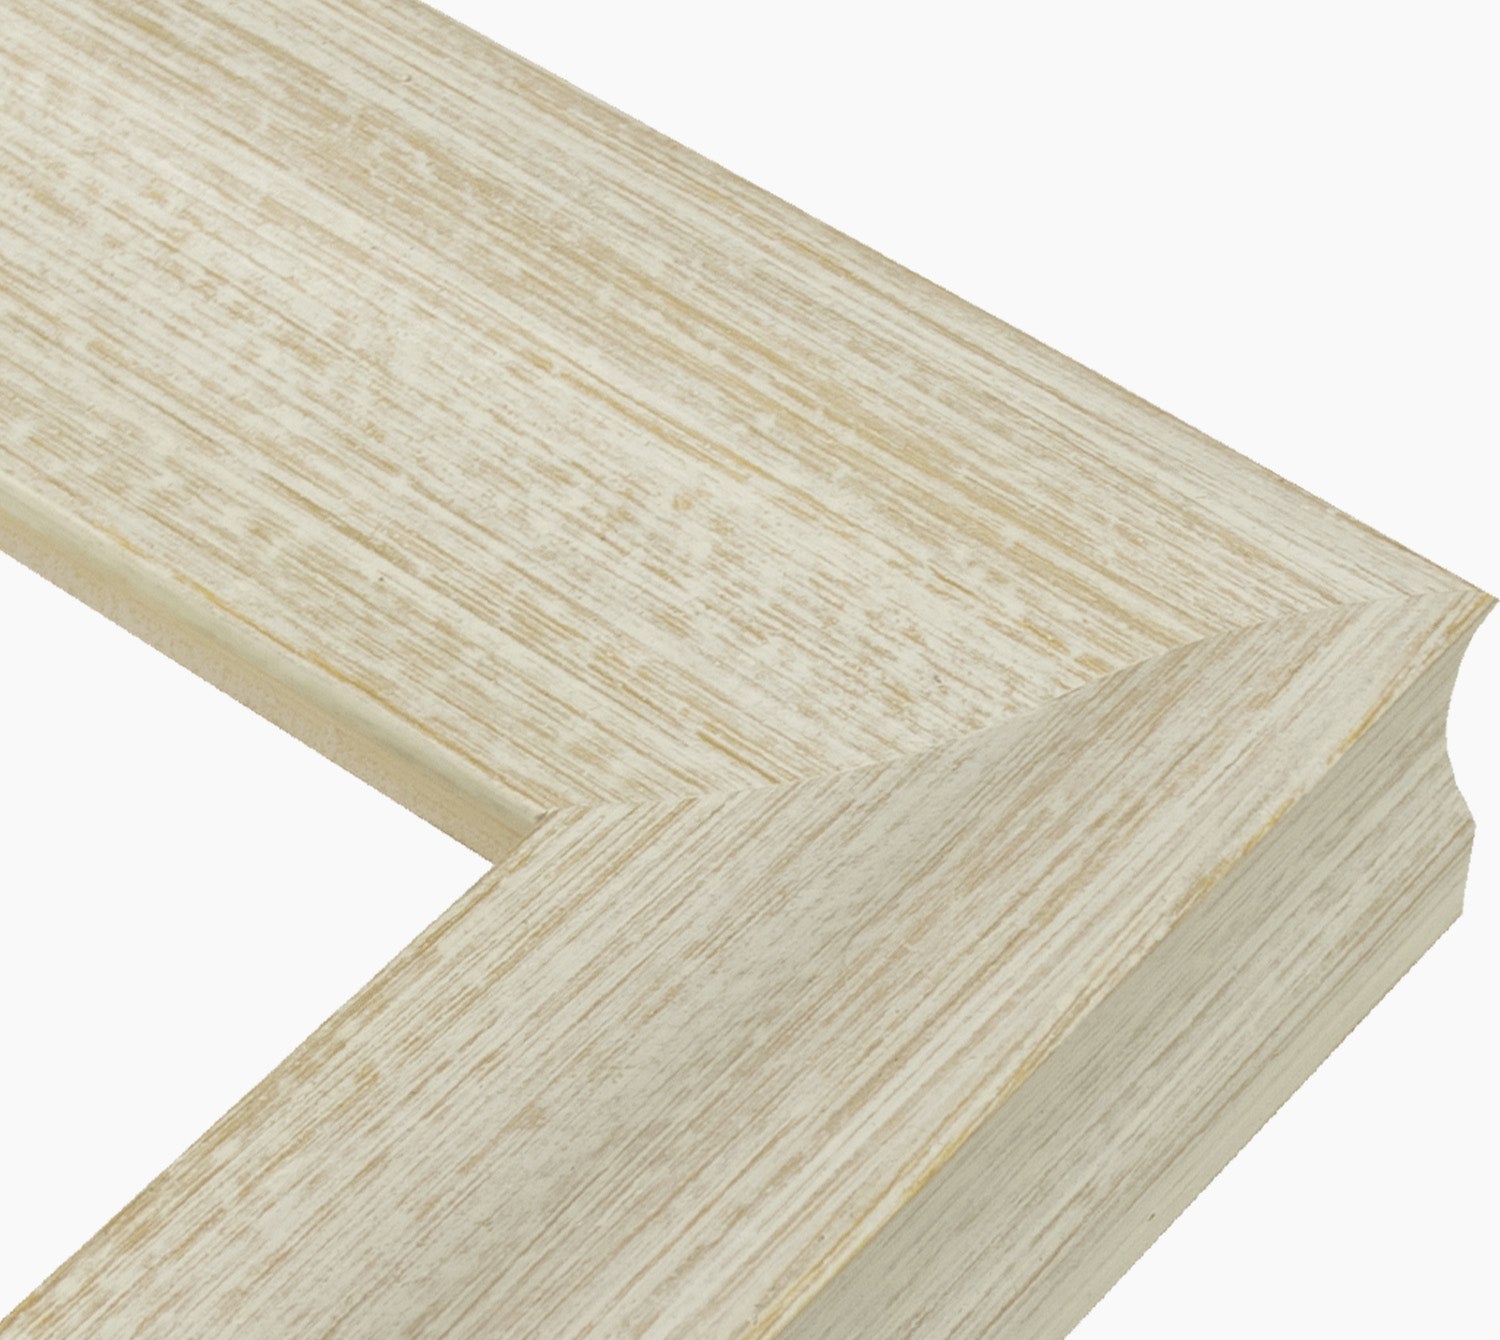 345.915 cadre en bois à fond ocre blanc mesure de profil 60x45 mm Lombarda cornici S.n.c.